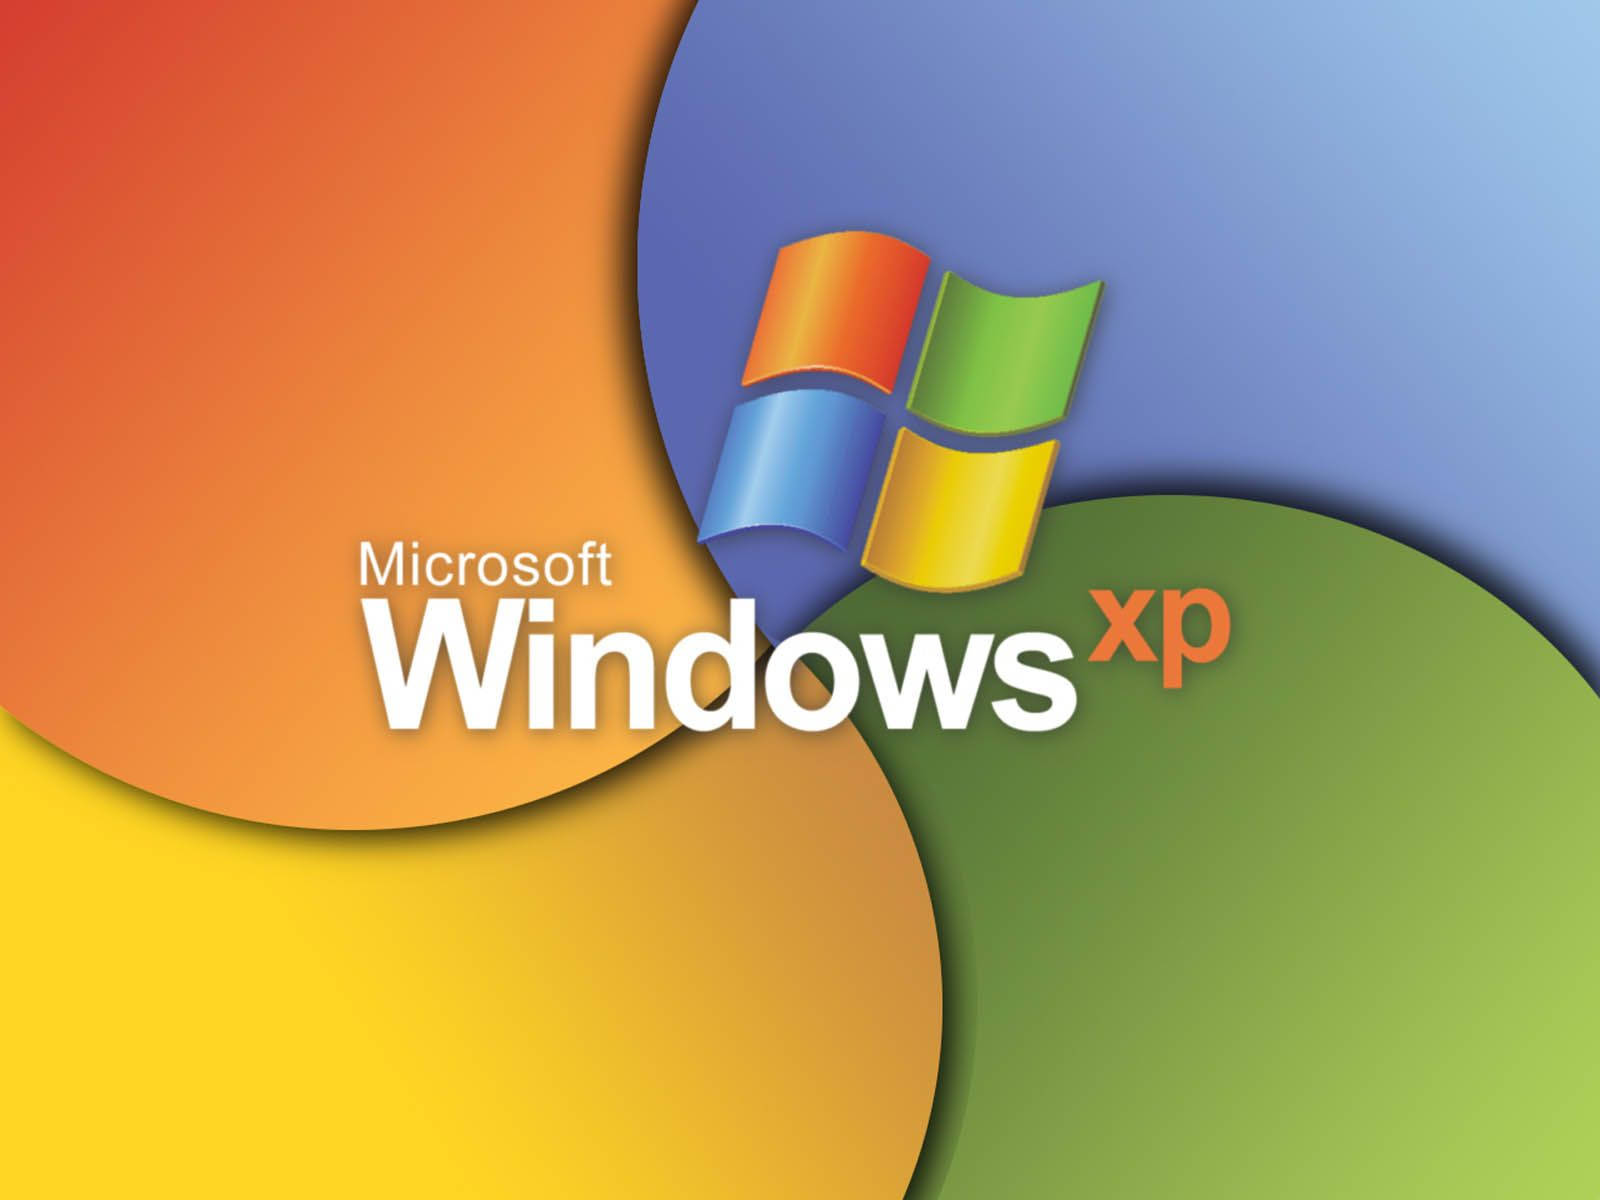 Microsoft Windows Xp Logo With Colorful Circles